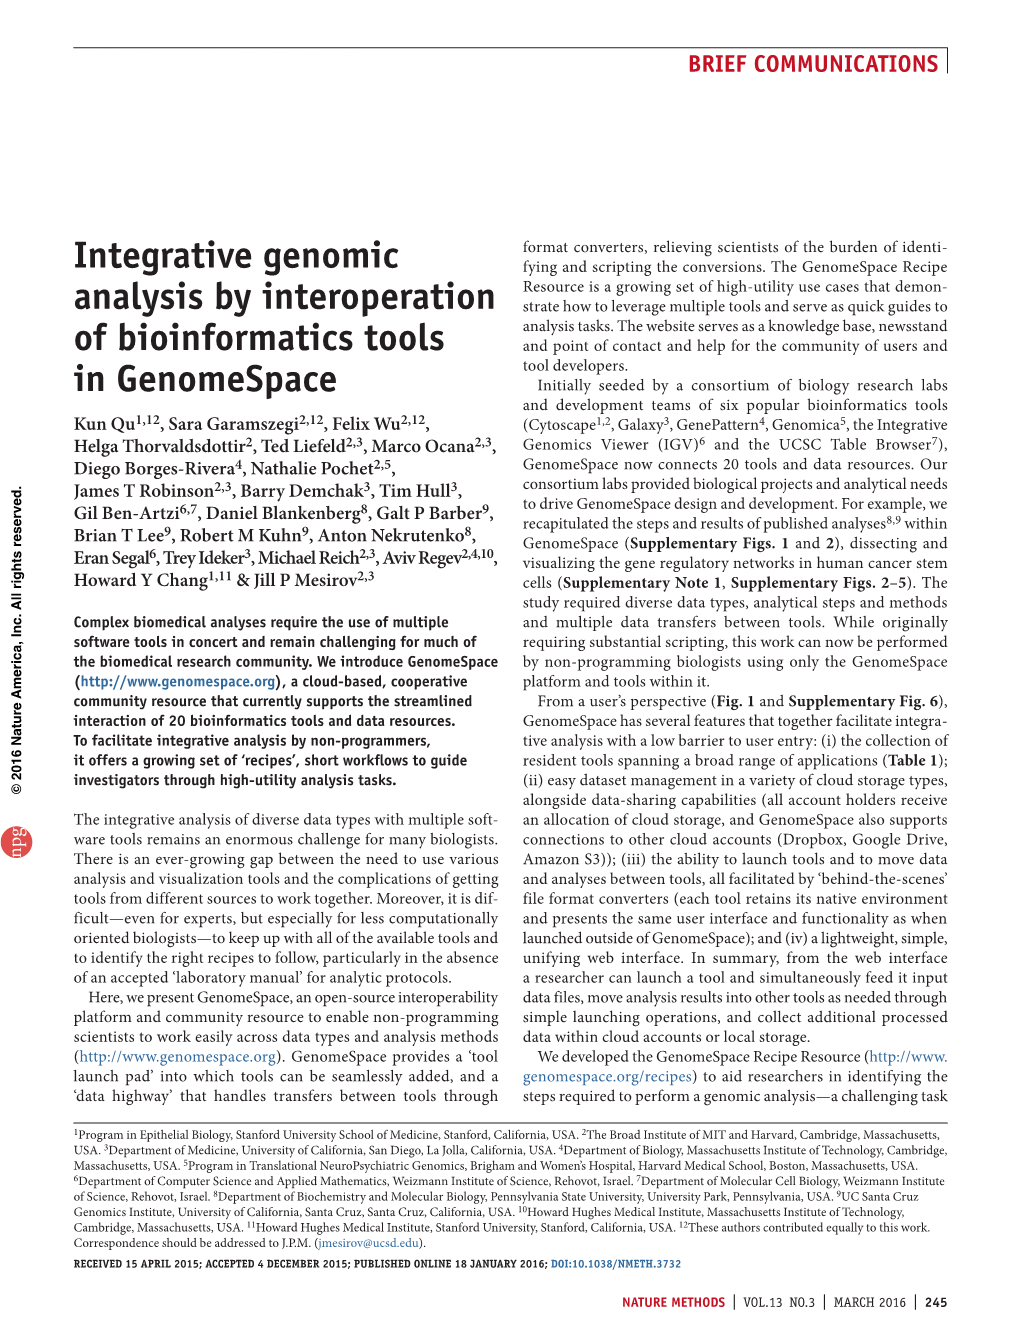 Integrative Genomic Analysis by Interoperation Of